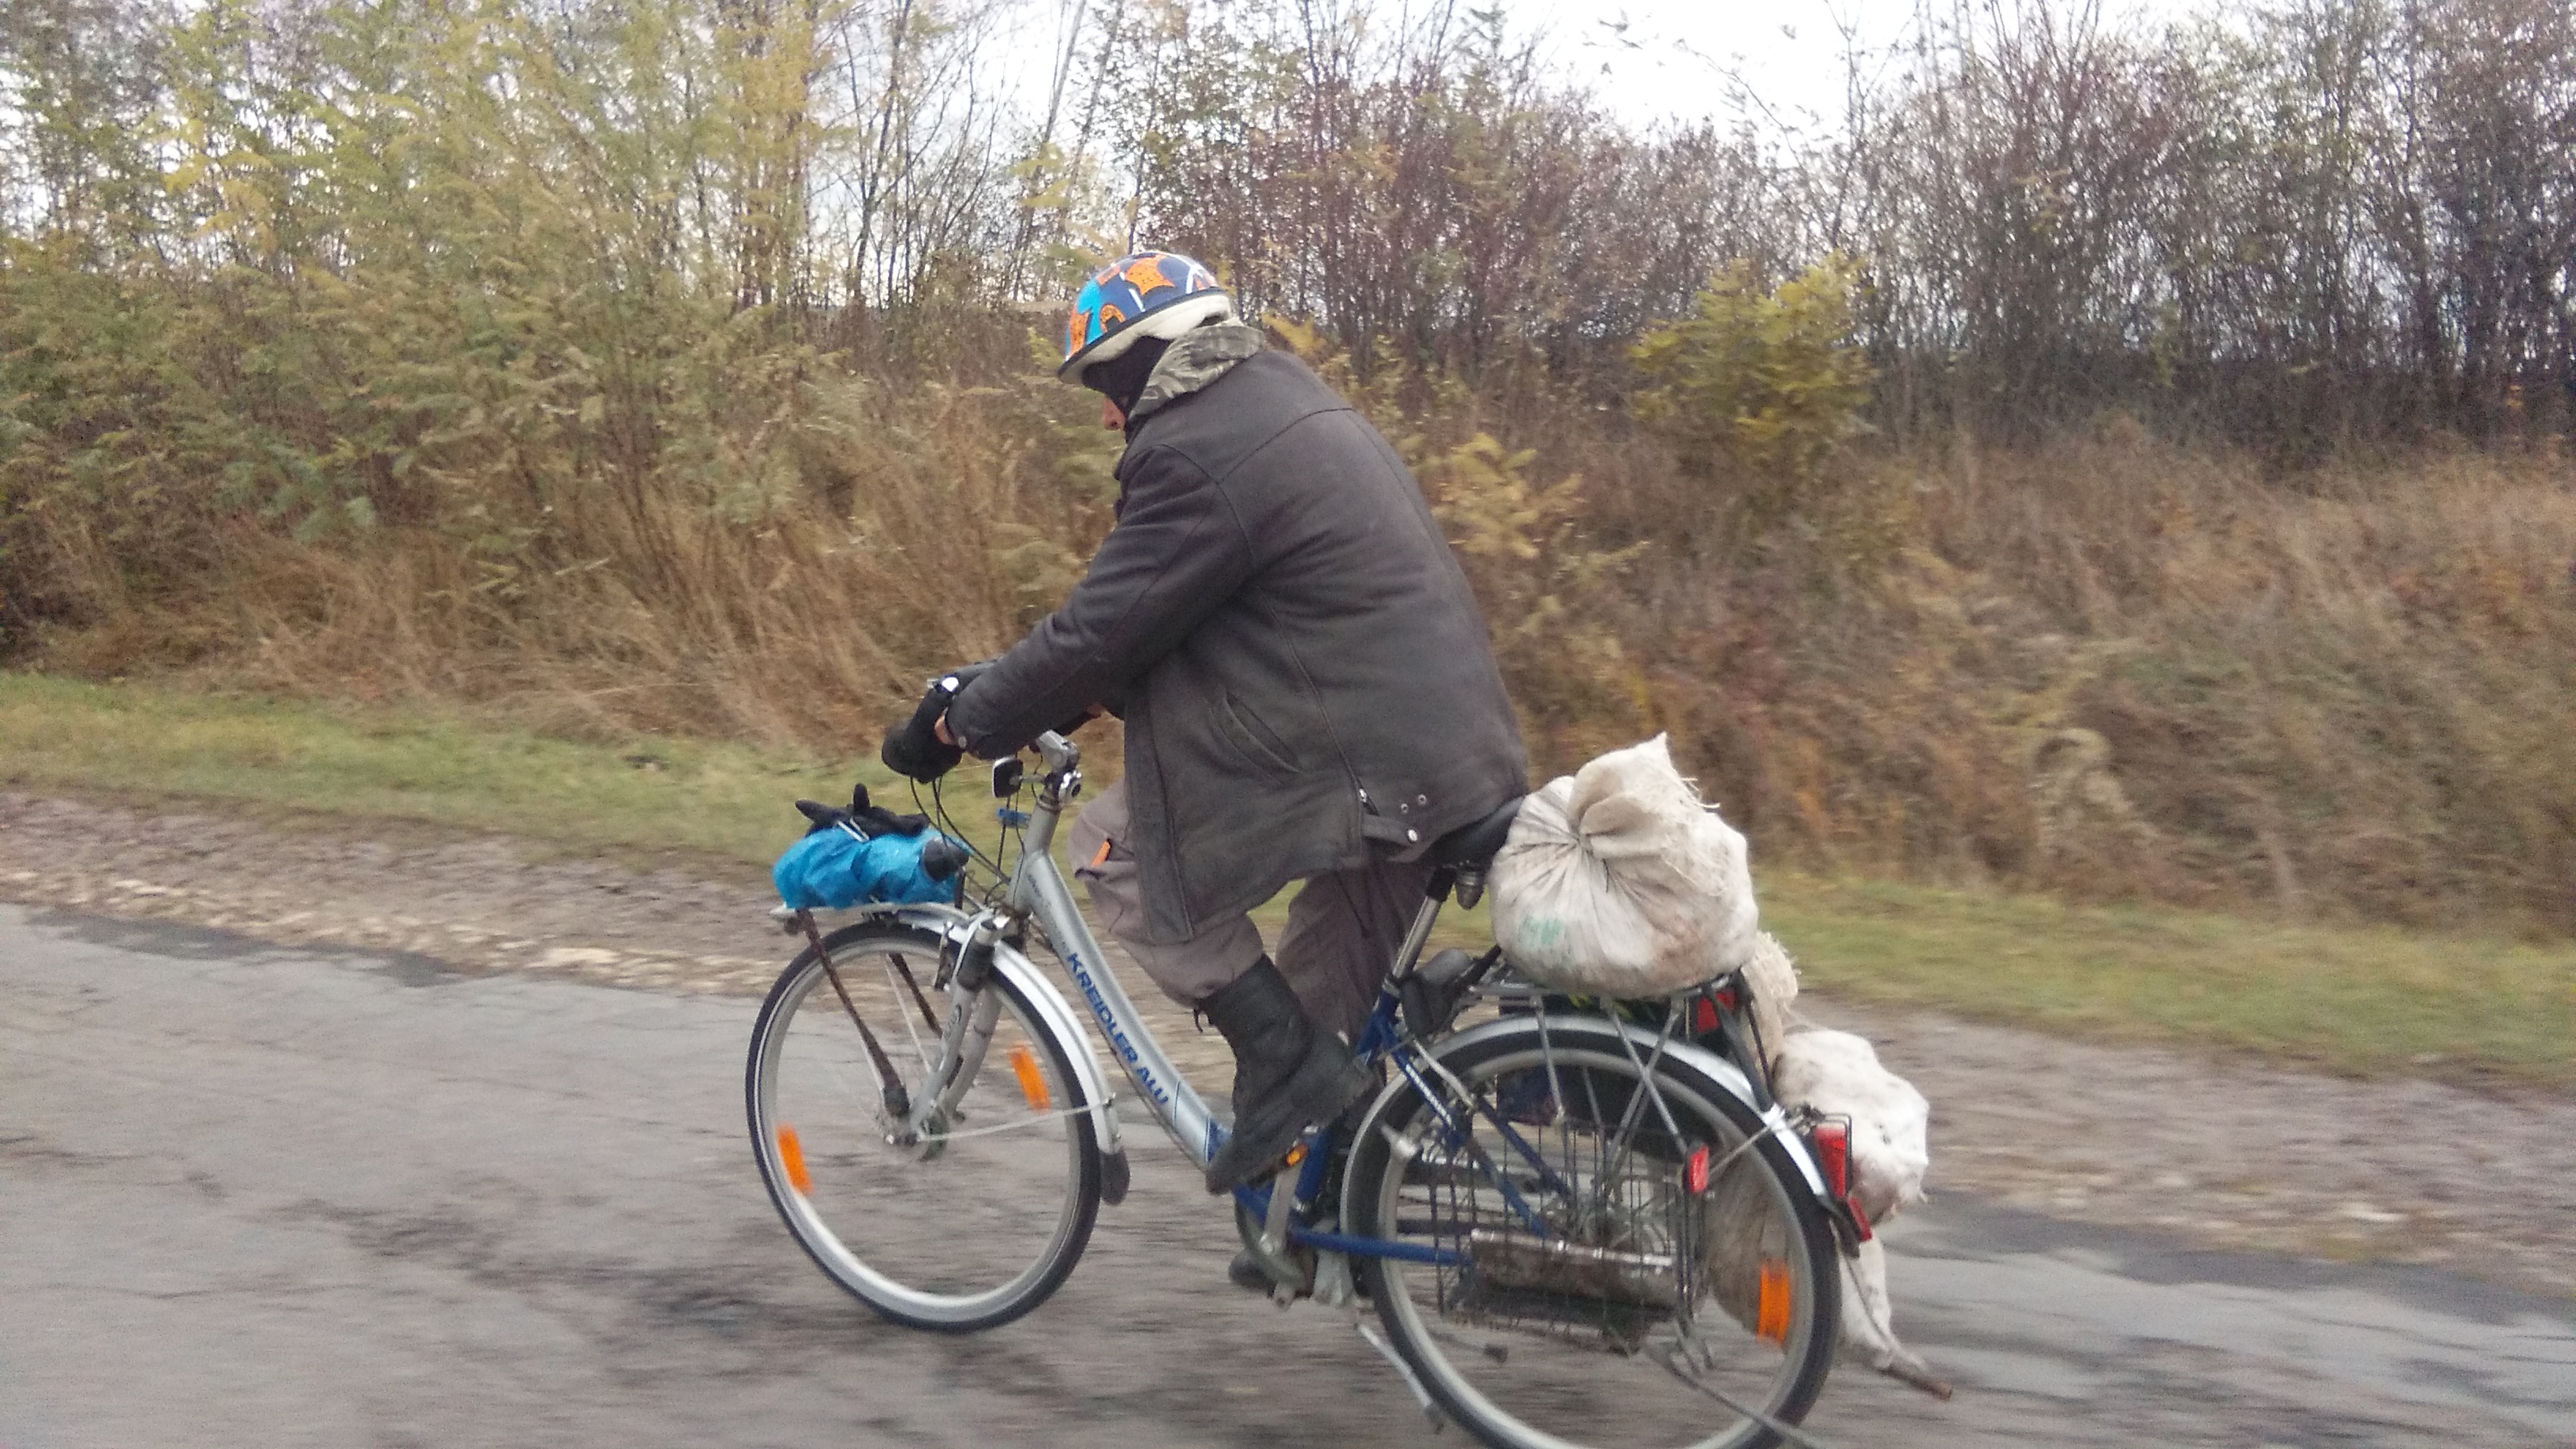 Vladimir on a German aluminium bicycle